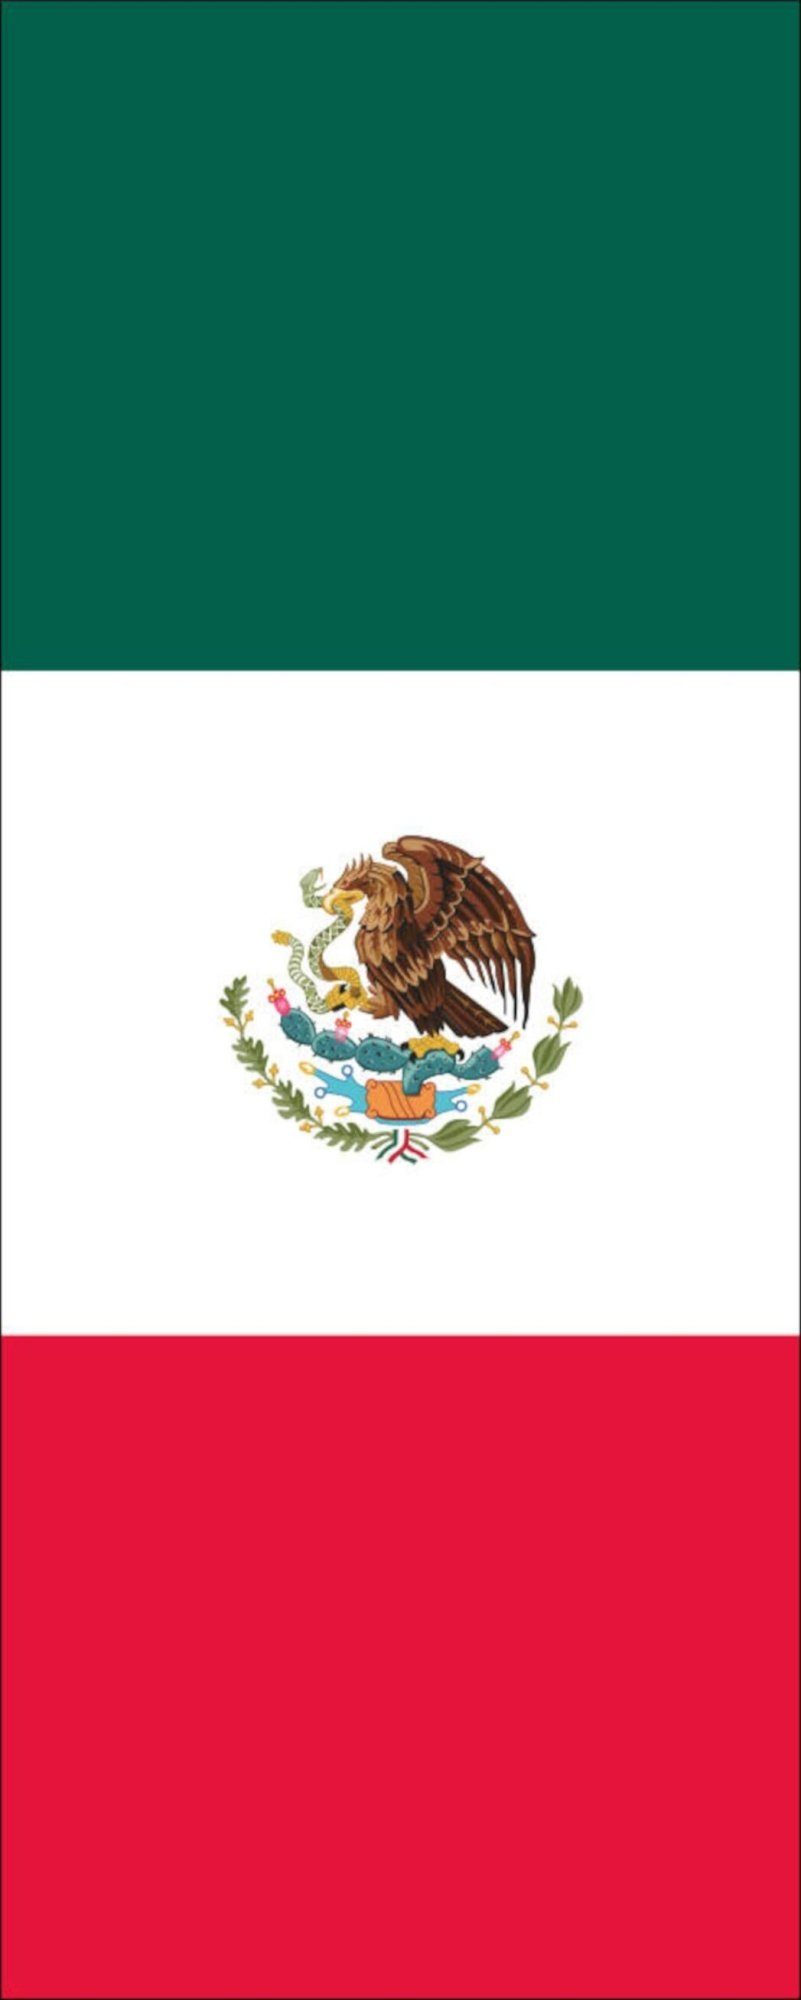 g/m² Hochformat Flagge Mexiko Flagge 110 flaggenmeer